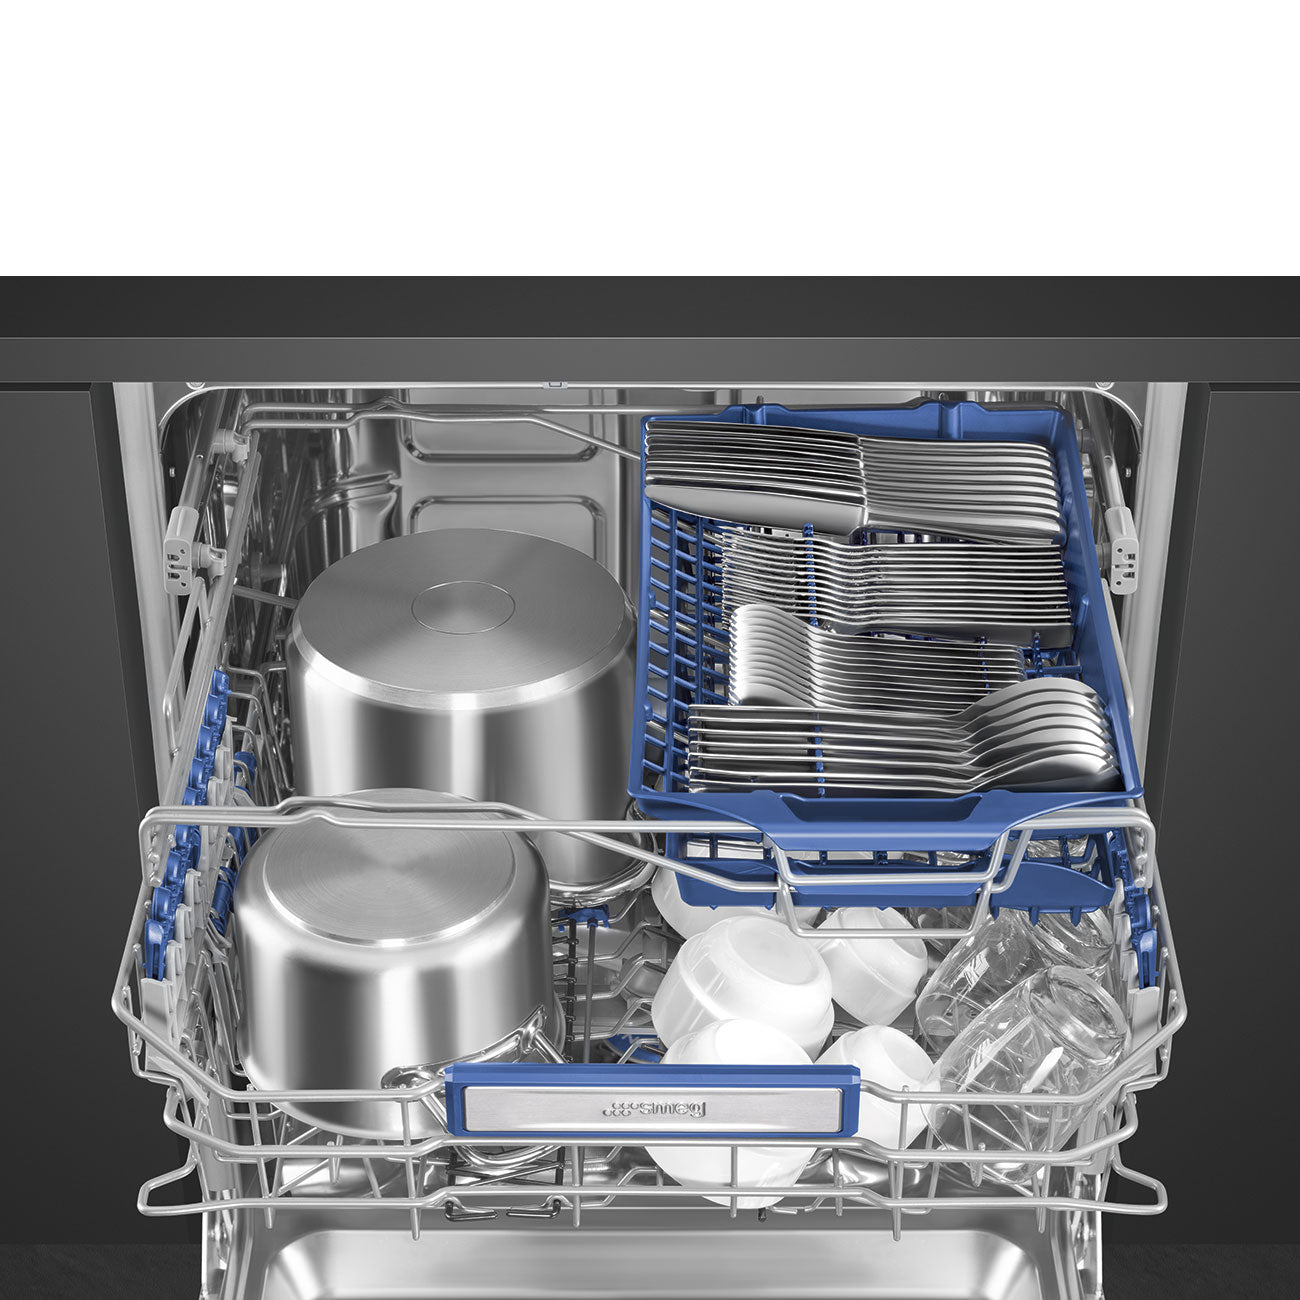 Smeg Semi-Professional Integrated Dishwasher, 9 Wash Programs ST323PM